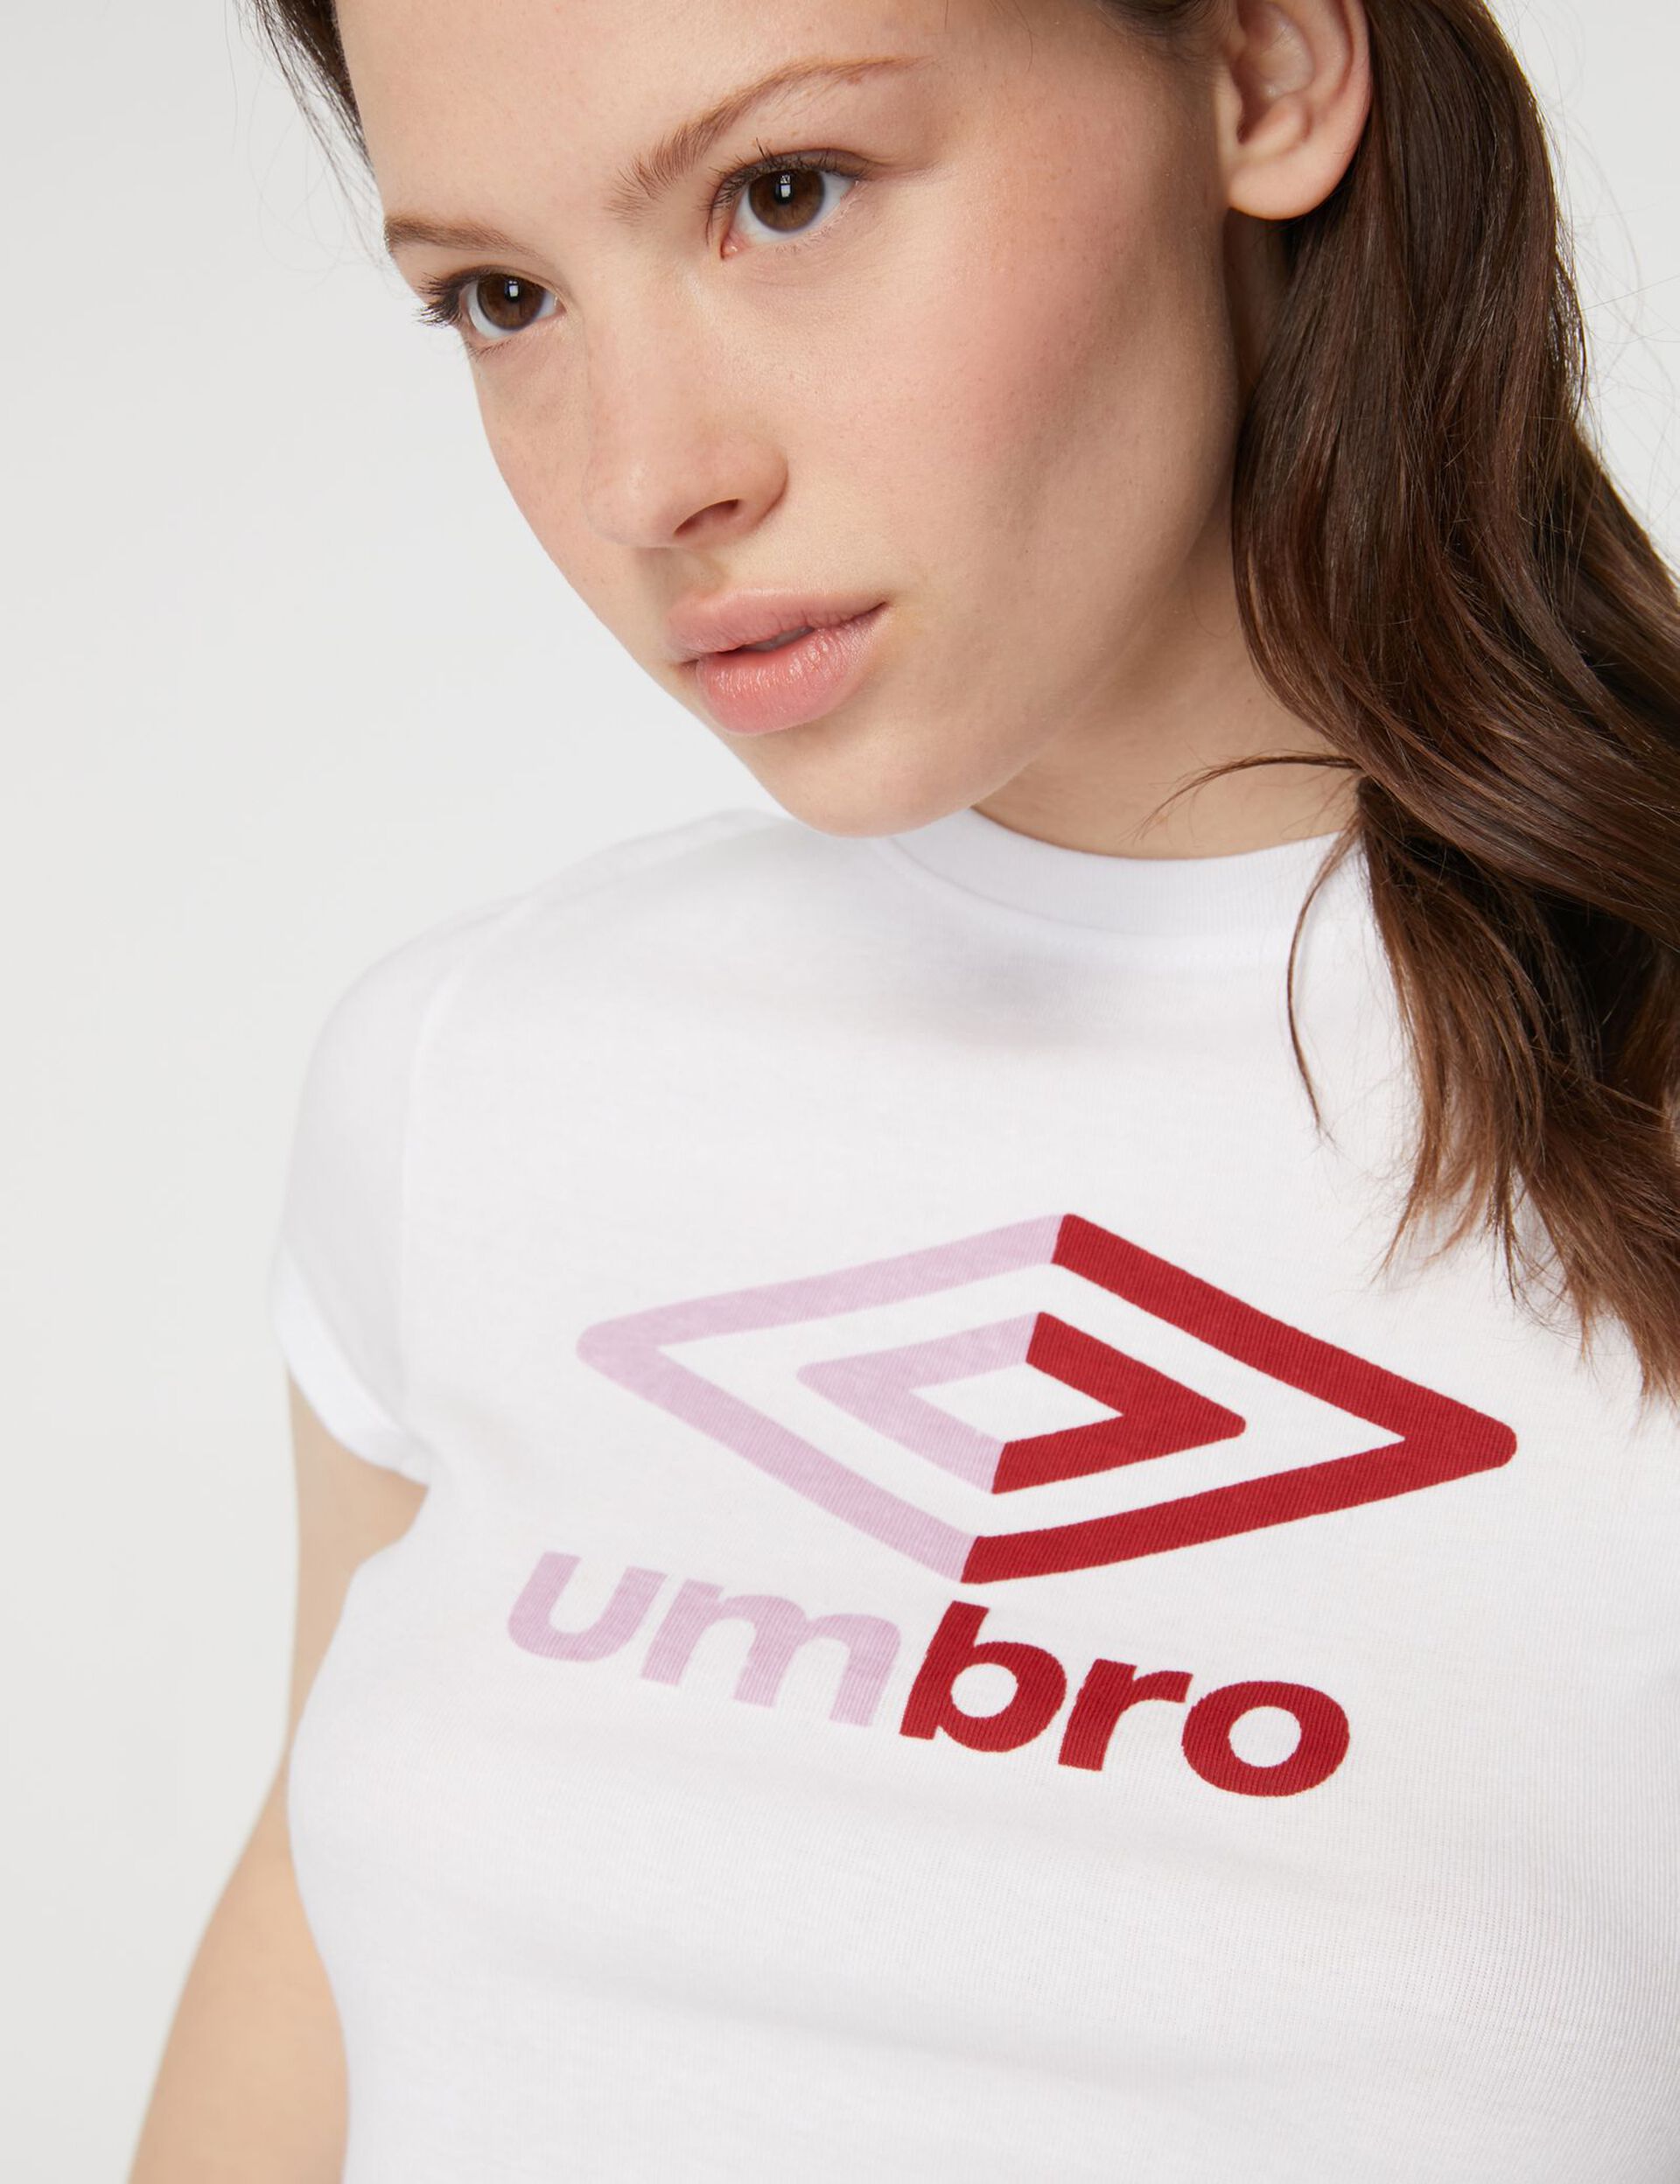 Tee-shirt court Umbro